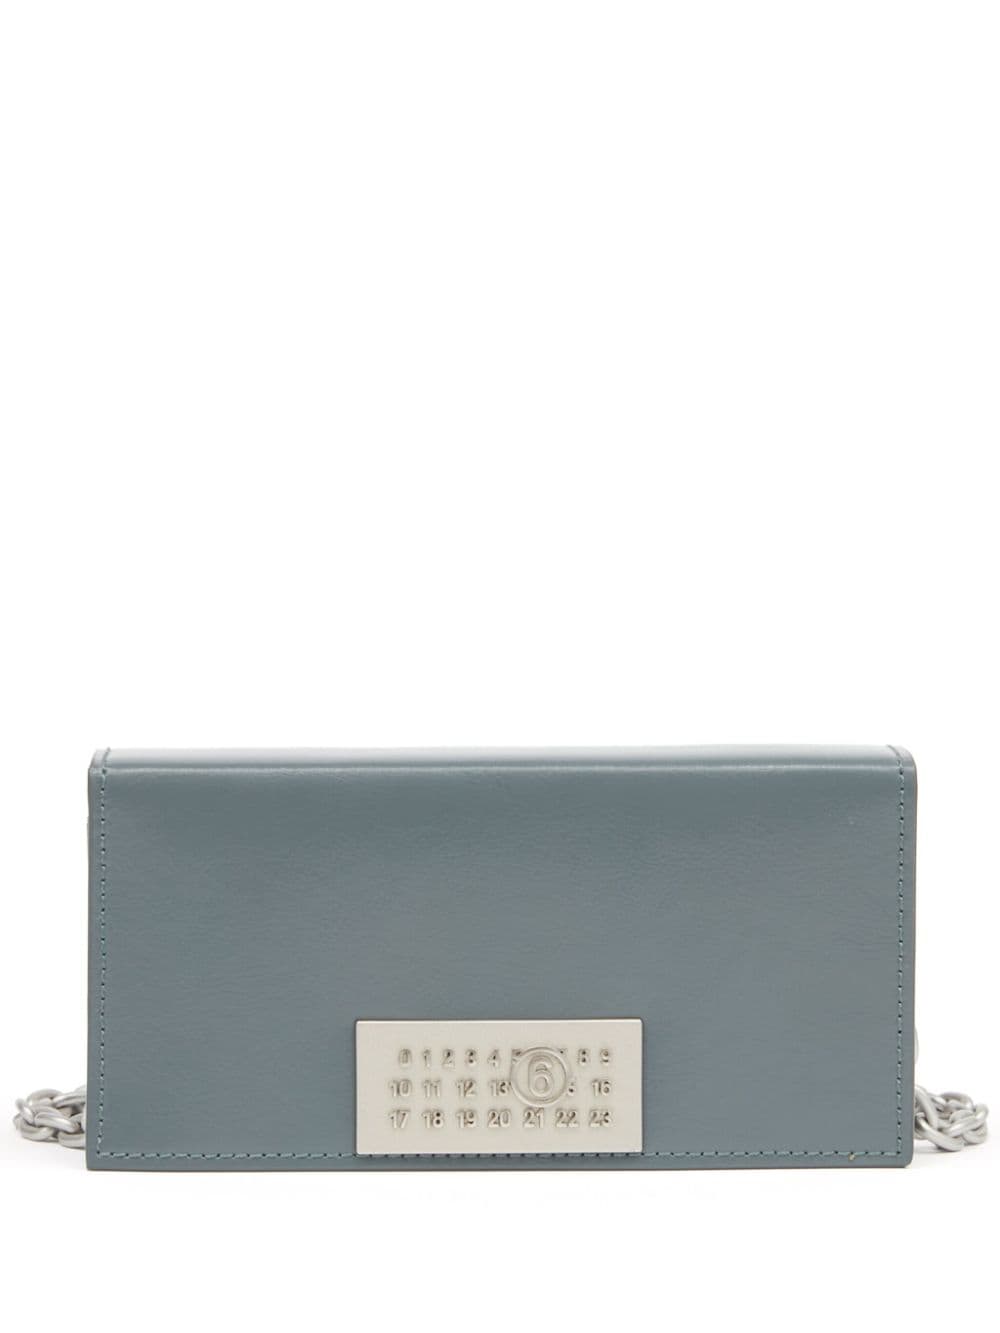 MM6 Maison Margiela Numeric chained leather purse - Grey